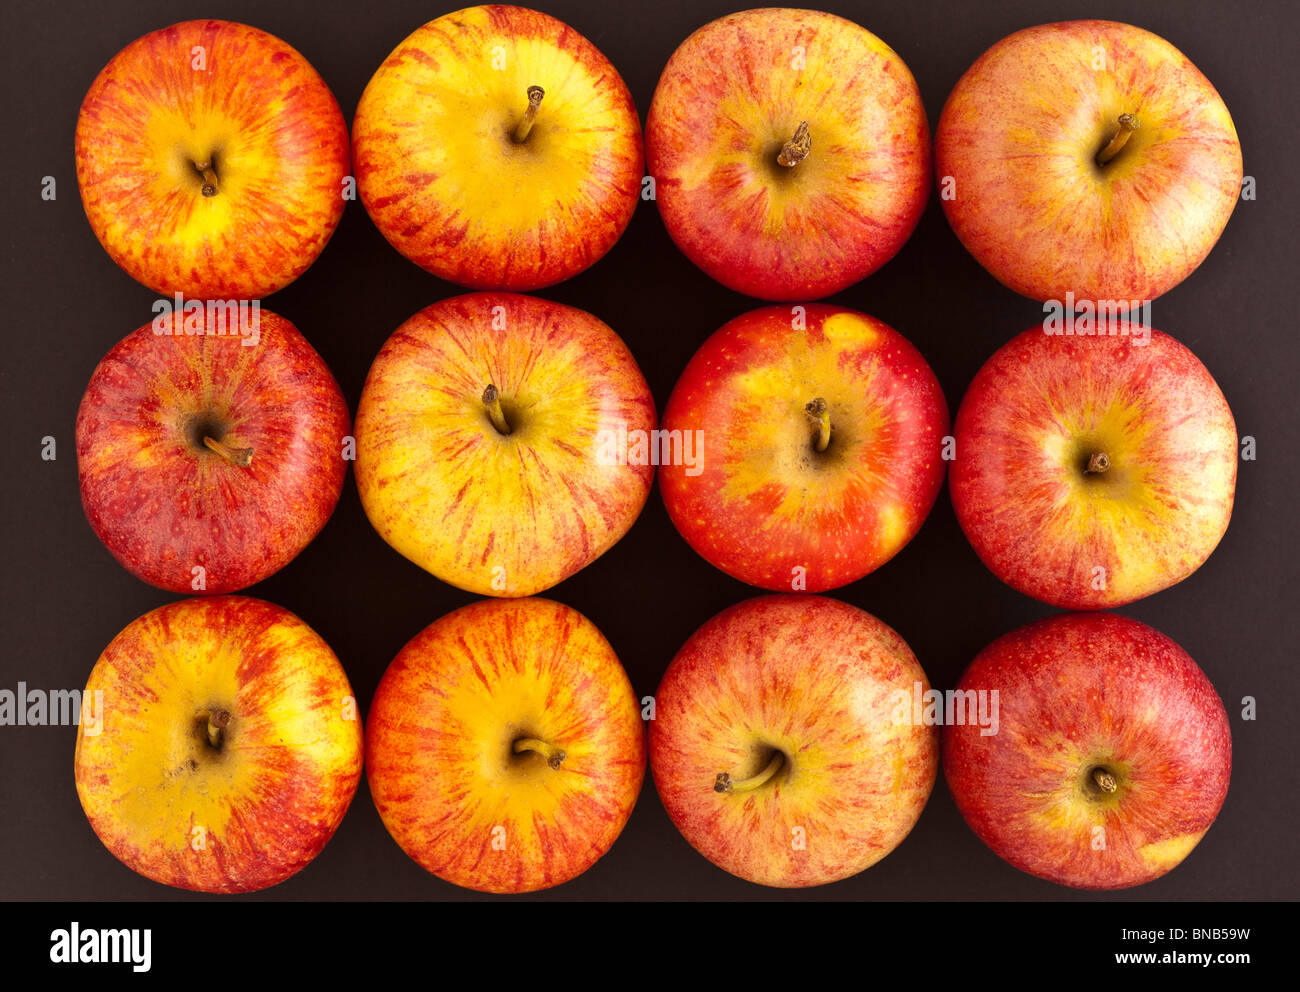 Twelve red apples in rows Stock Photo